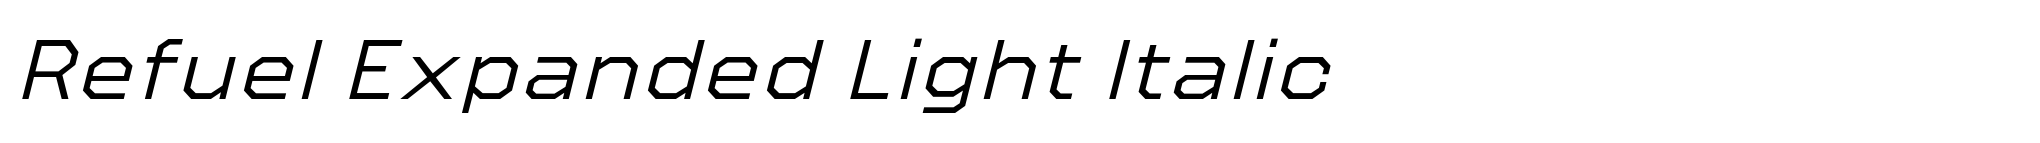 Refuel Expanded Light Italic image